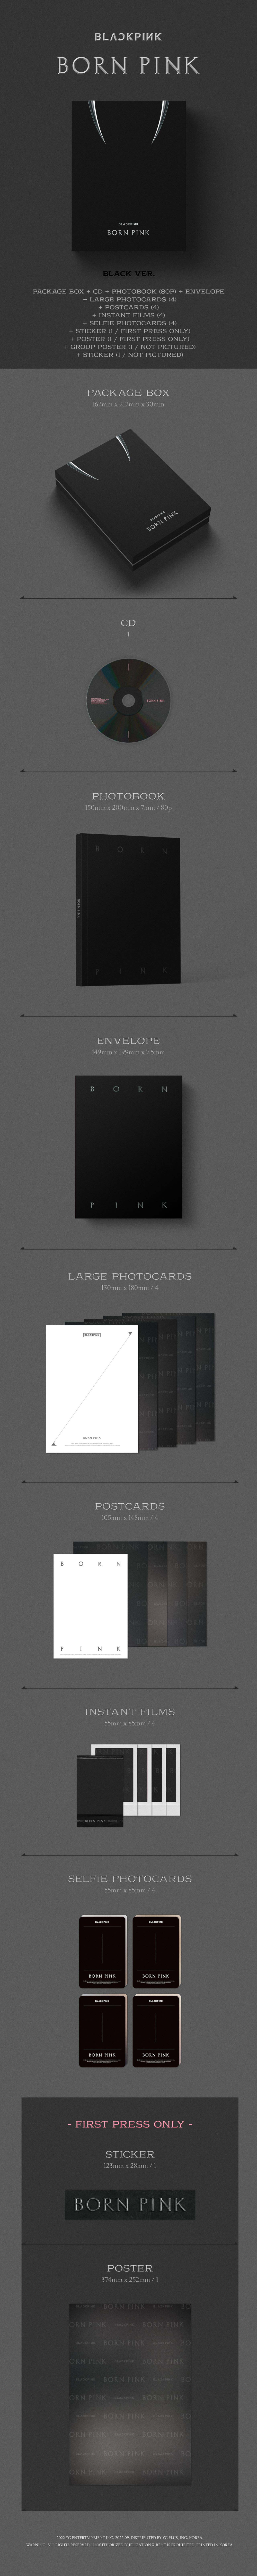 - Born Pink (CD) Blackpink Black/Ver.B) (Ltd.Edt.Boxset -